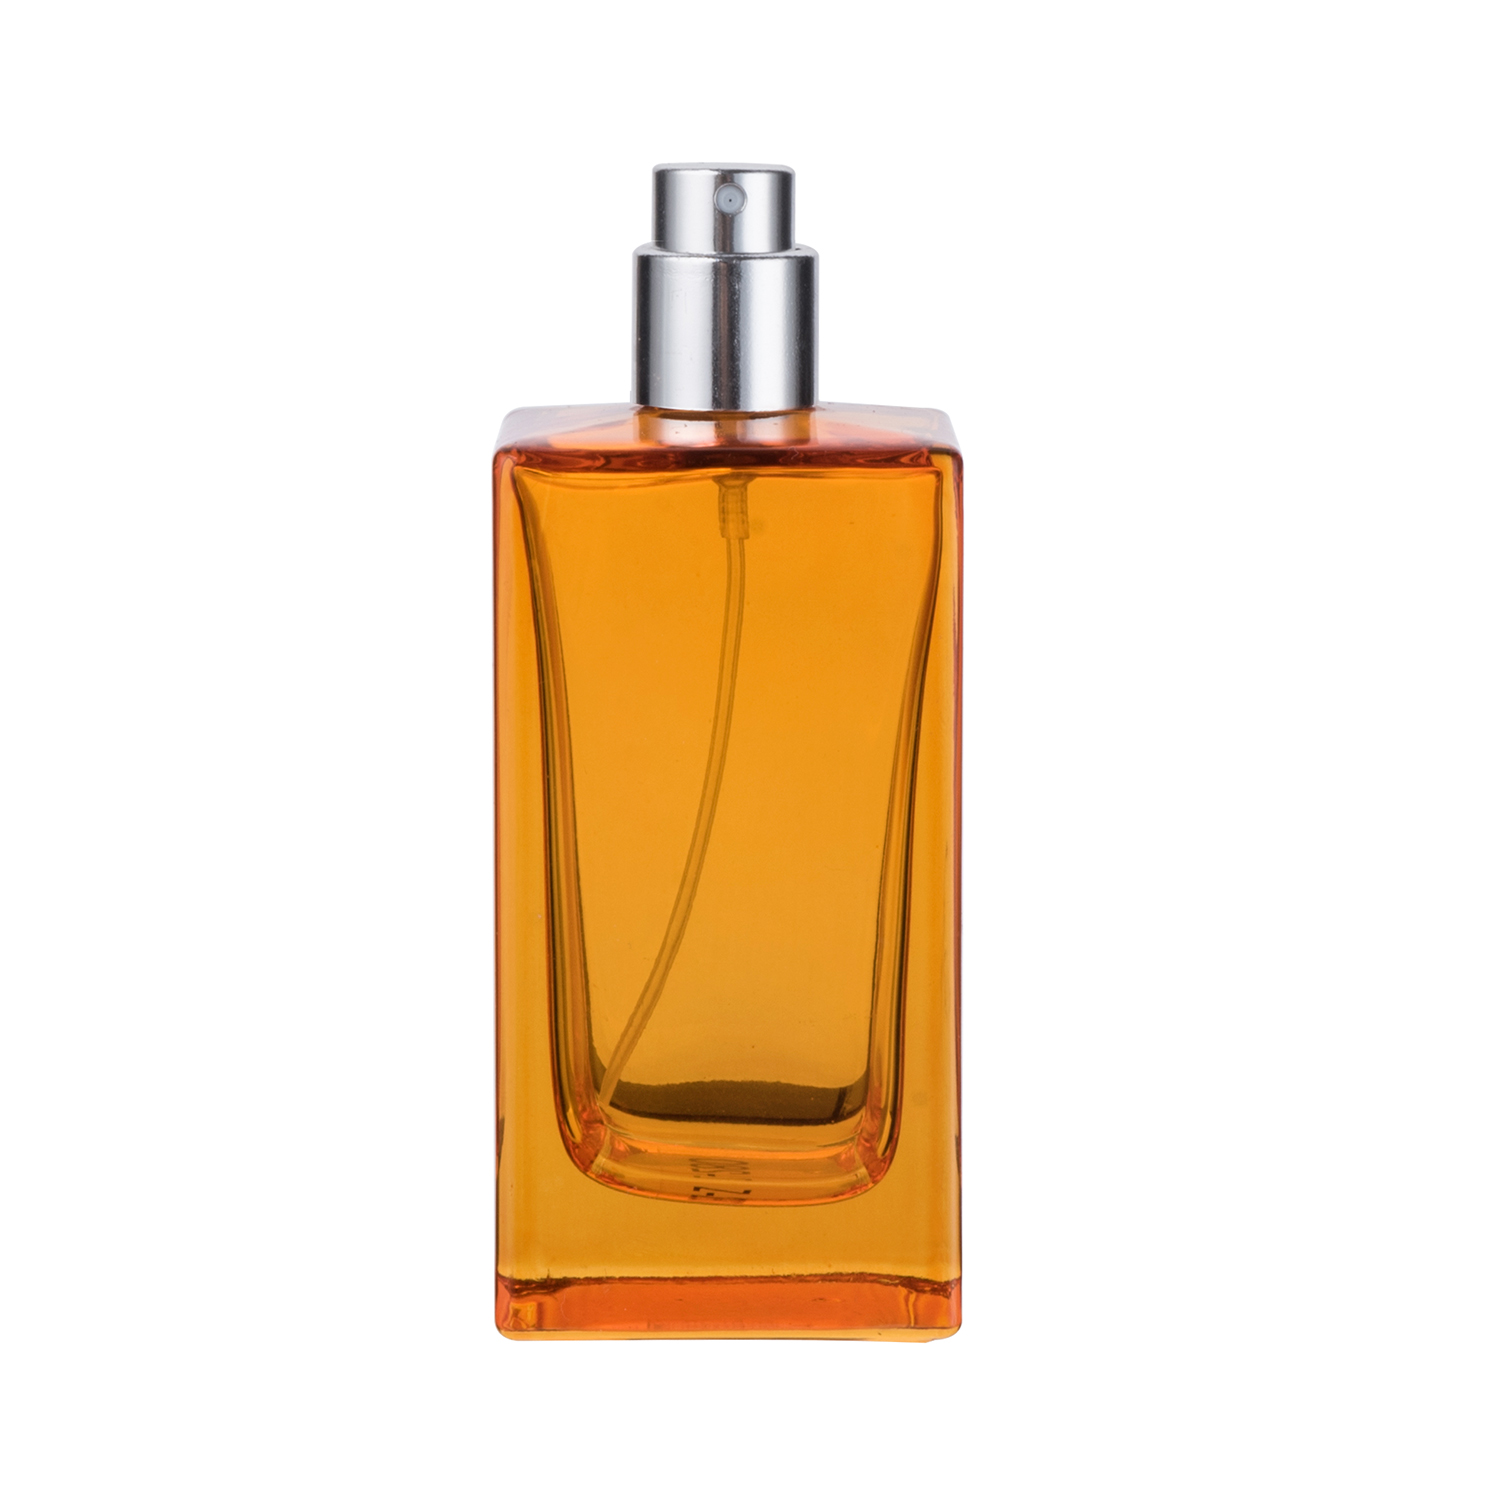 55ml New Glass Perfume Bottle Fragrance Glass Bottle with Spray Pump